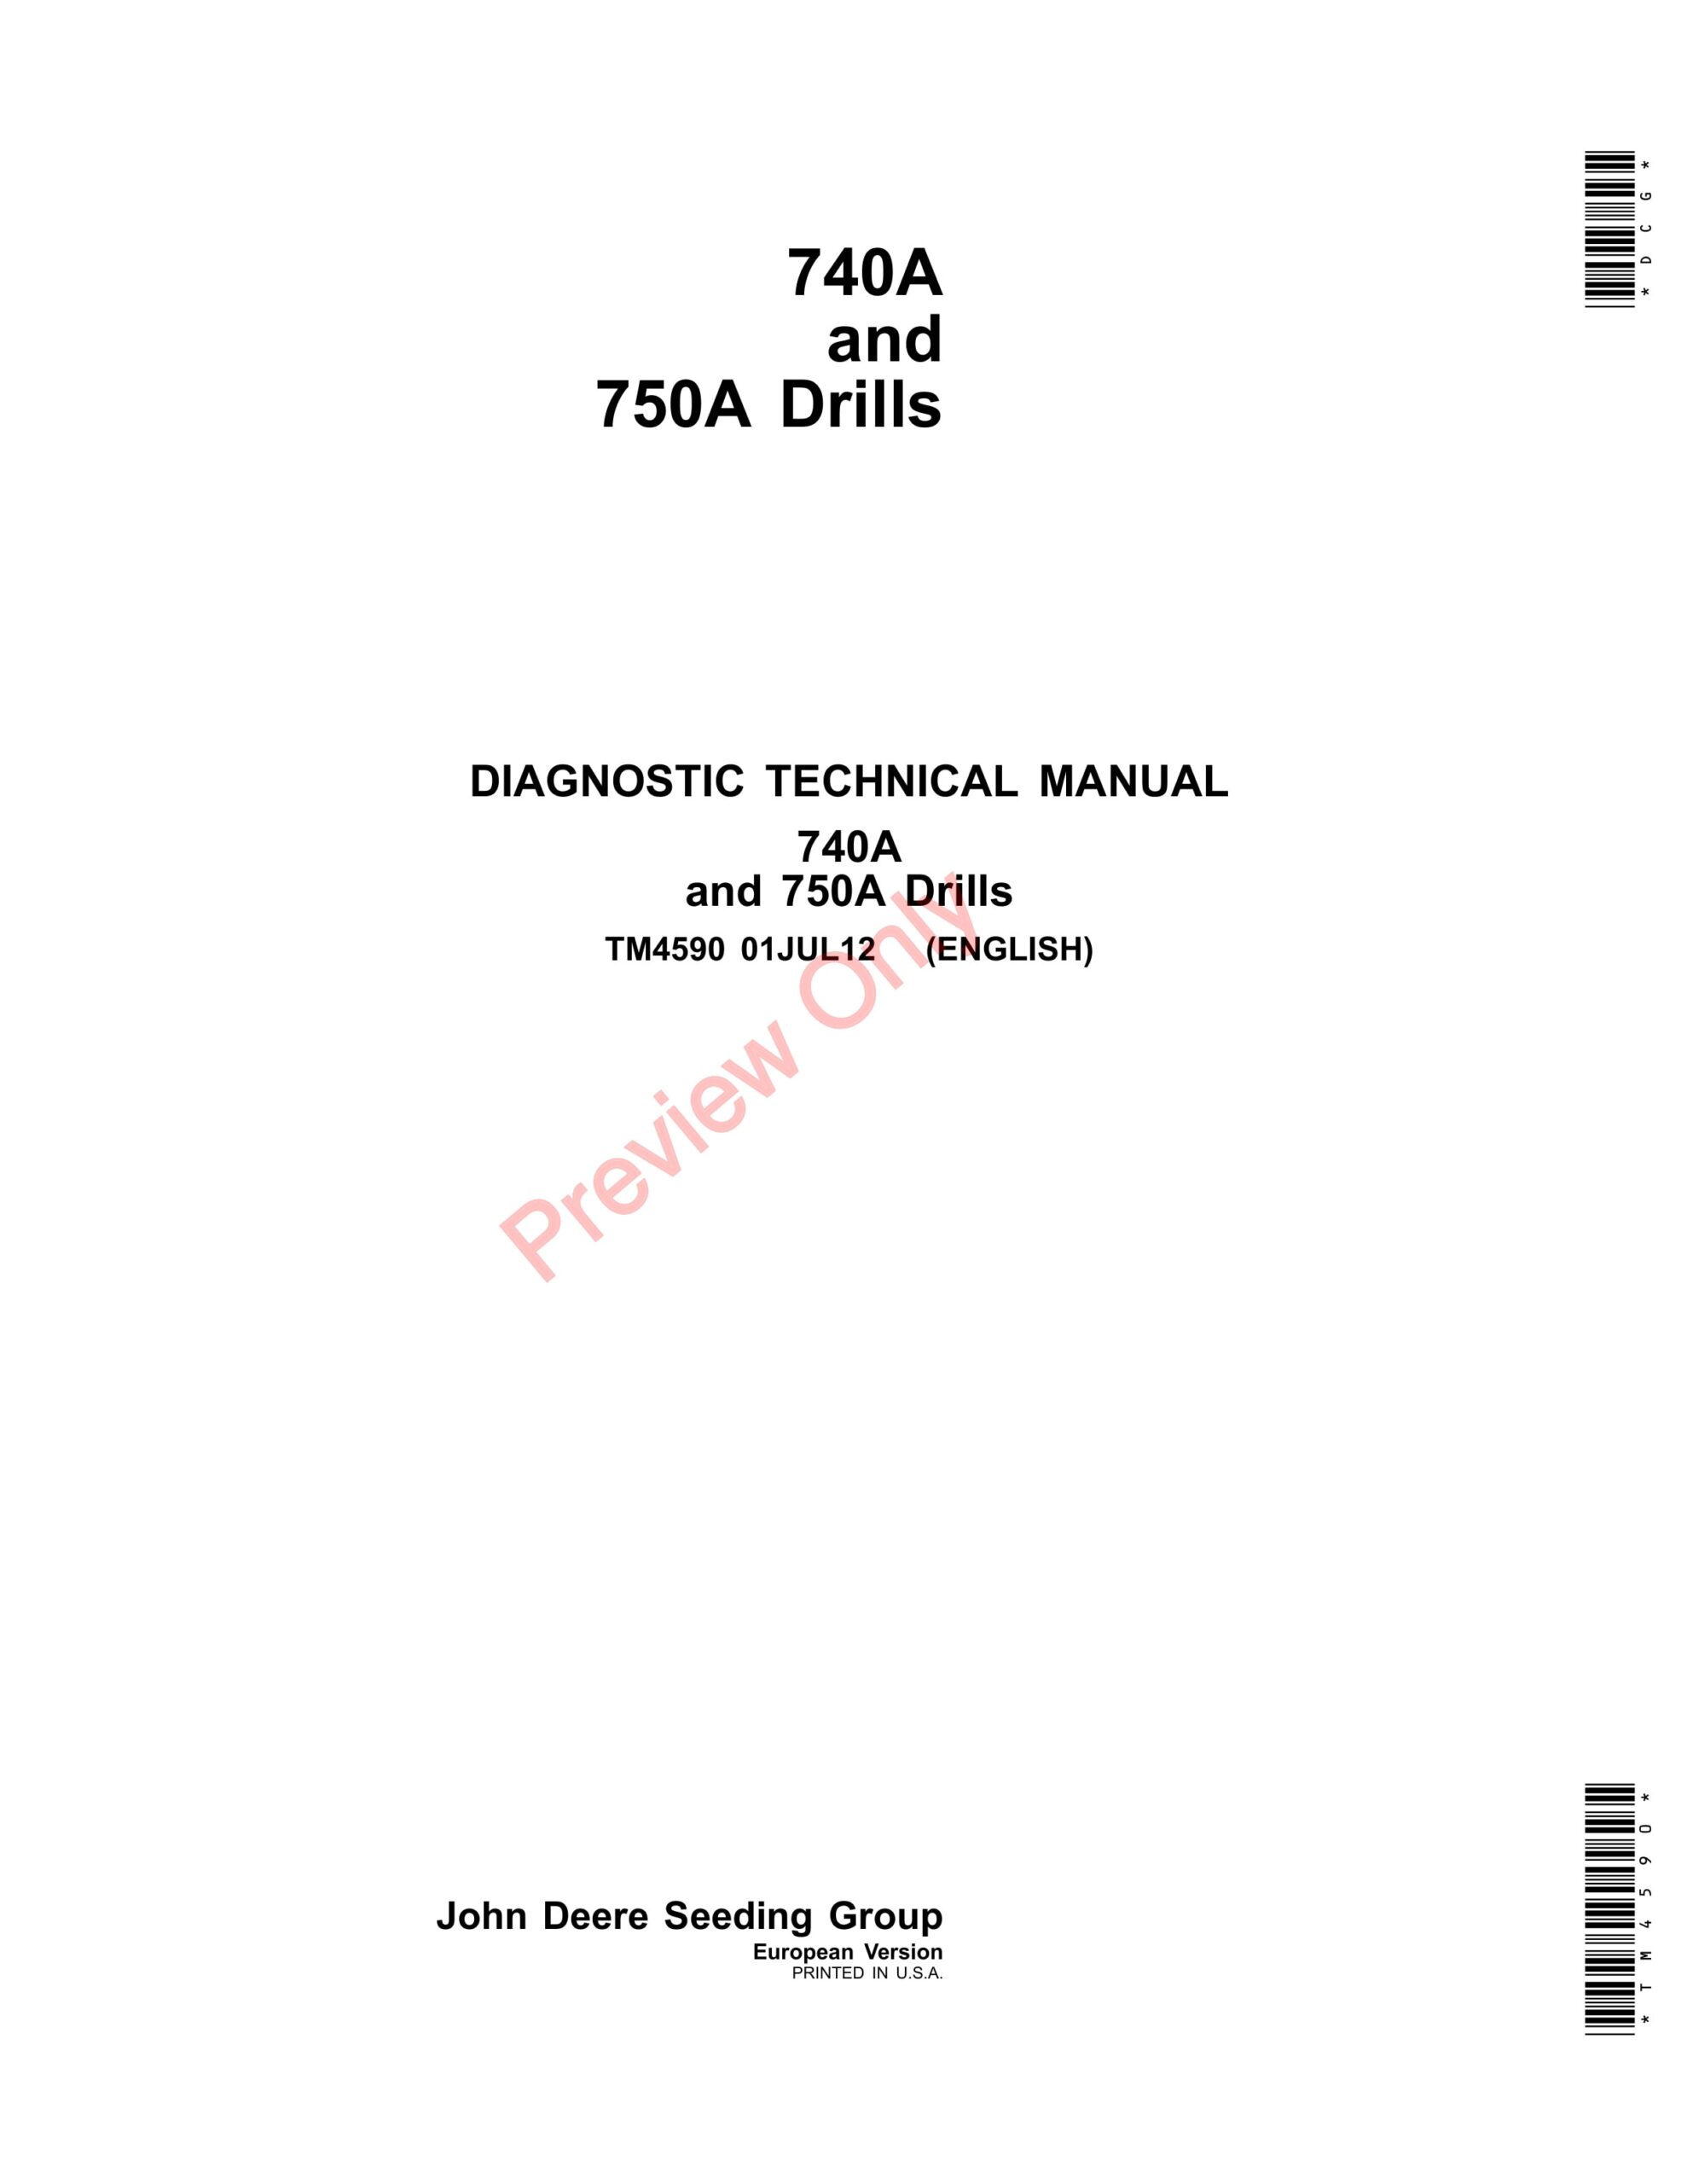 John Deere 740A and 750A Mulch Drills Diagnostic Technical Manual TM4590 31MAR16-1